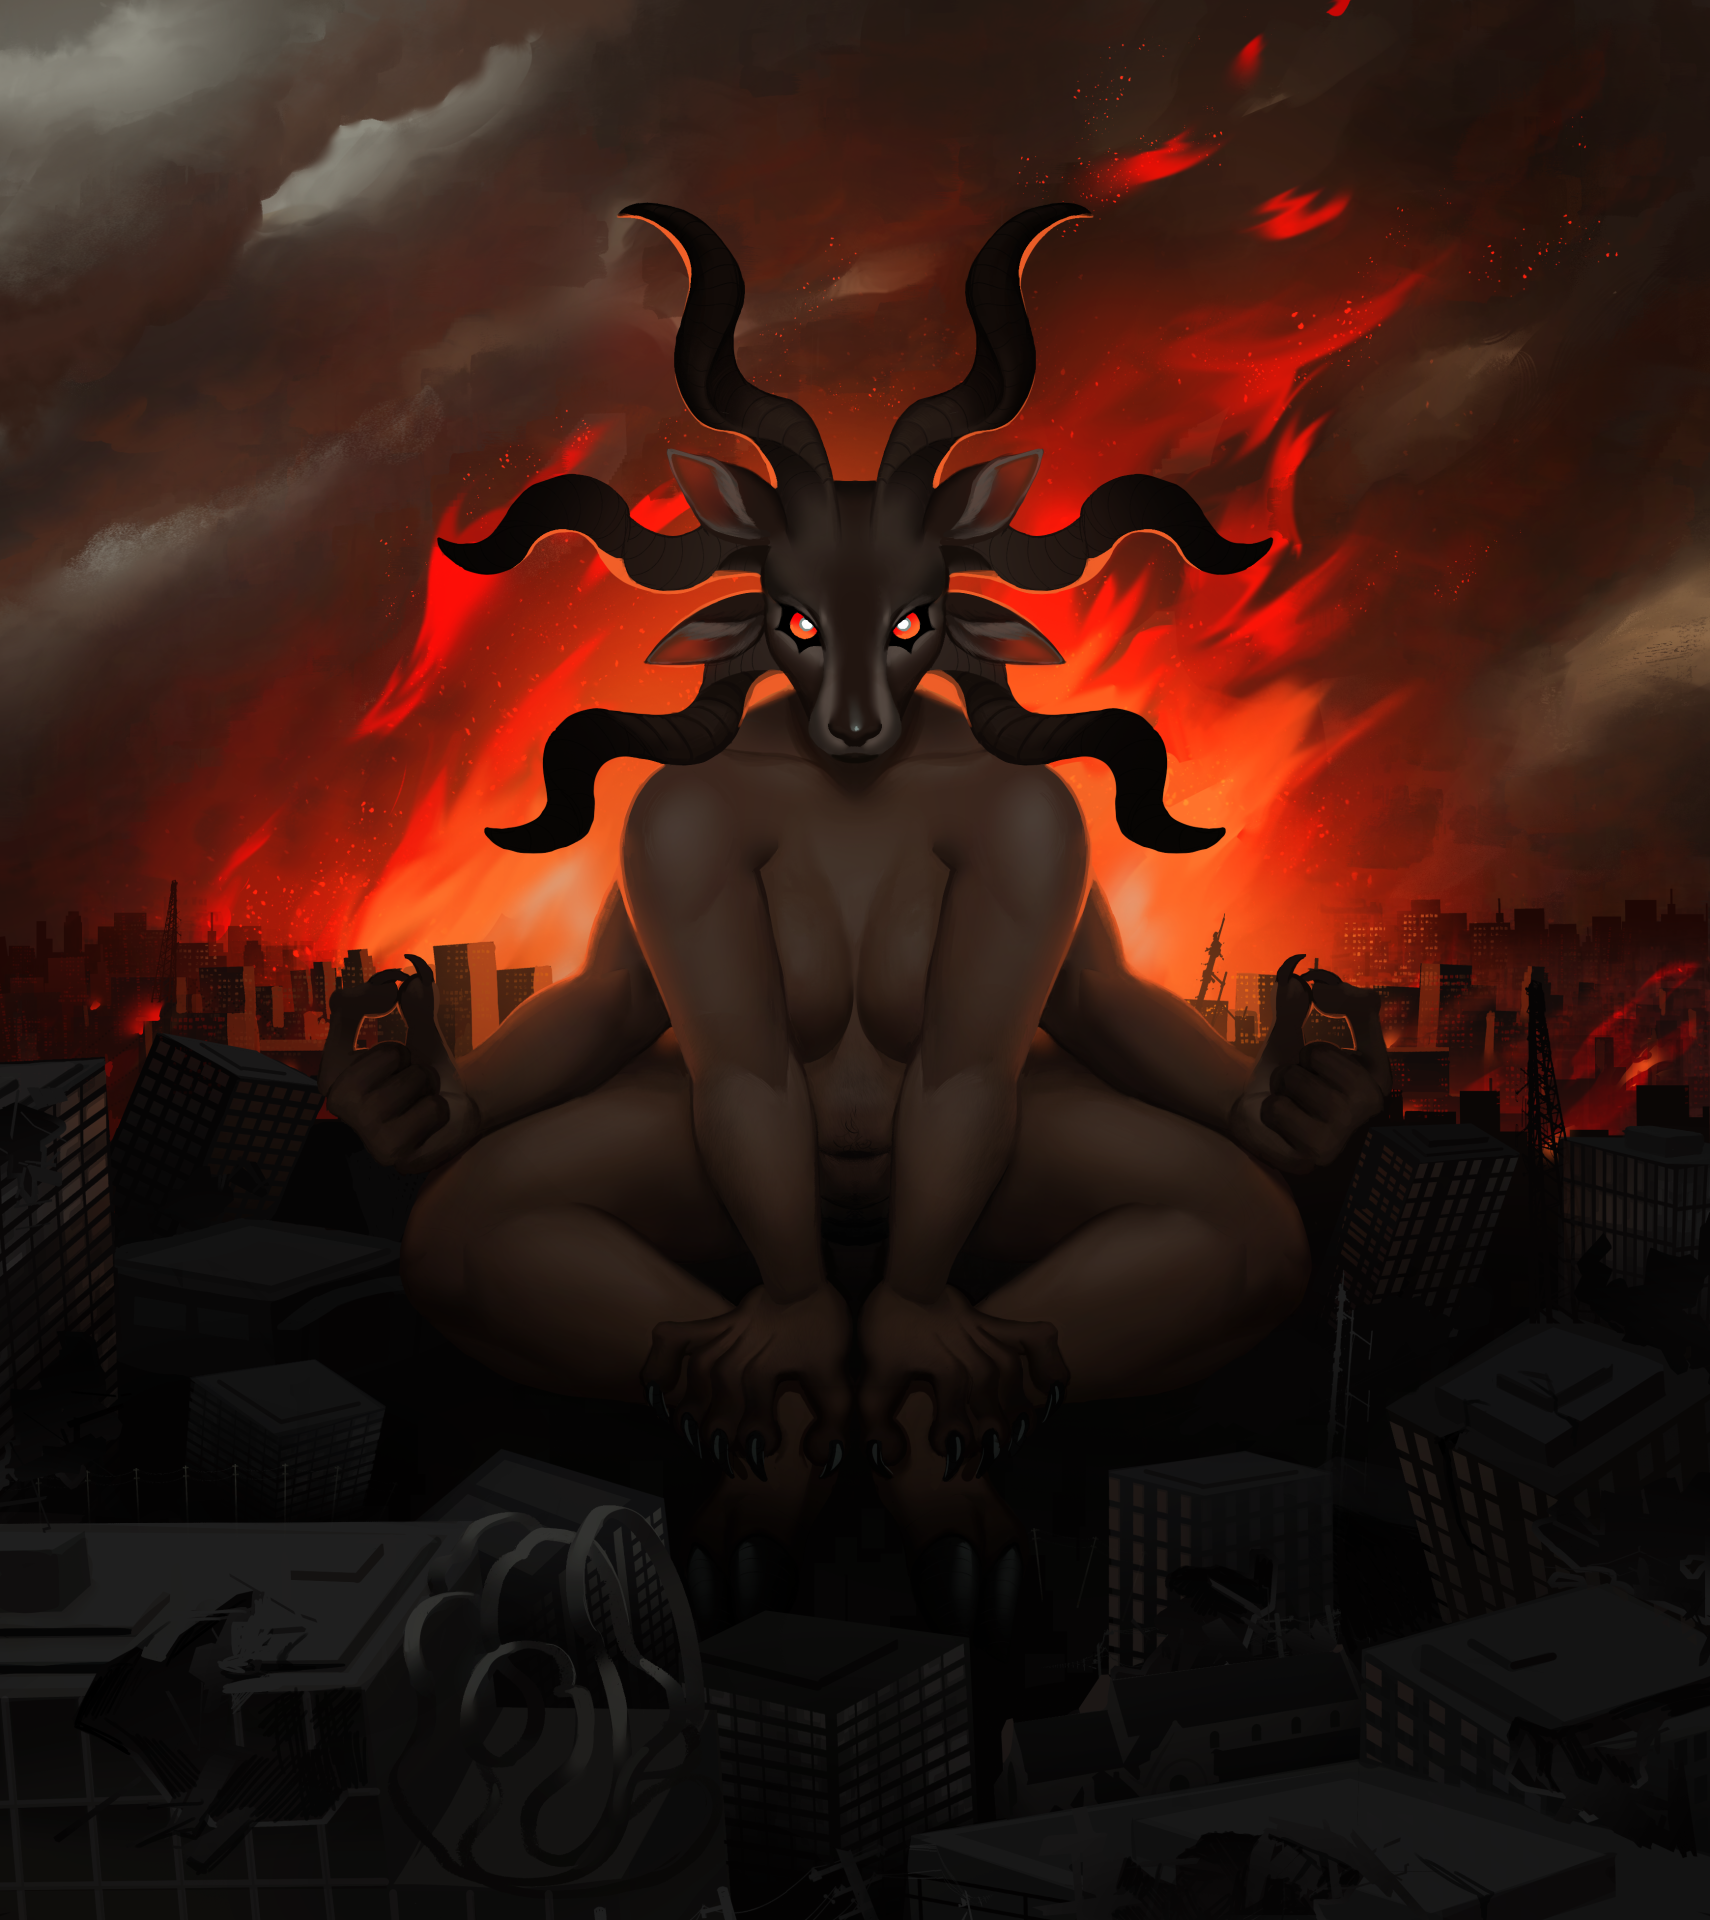 A digital image of a deity sitting among a burning city.